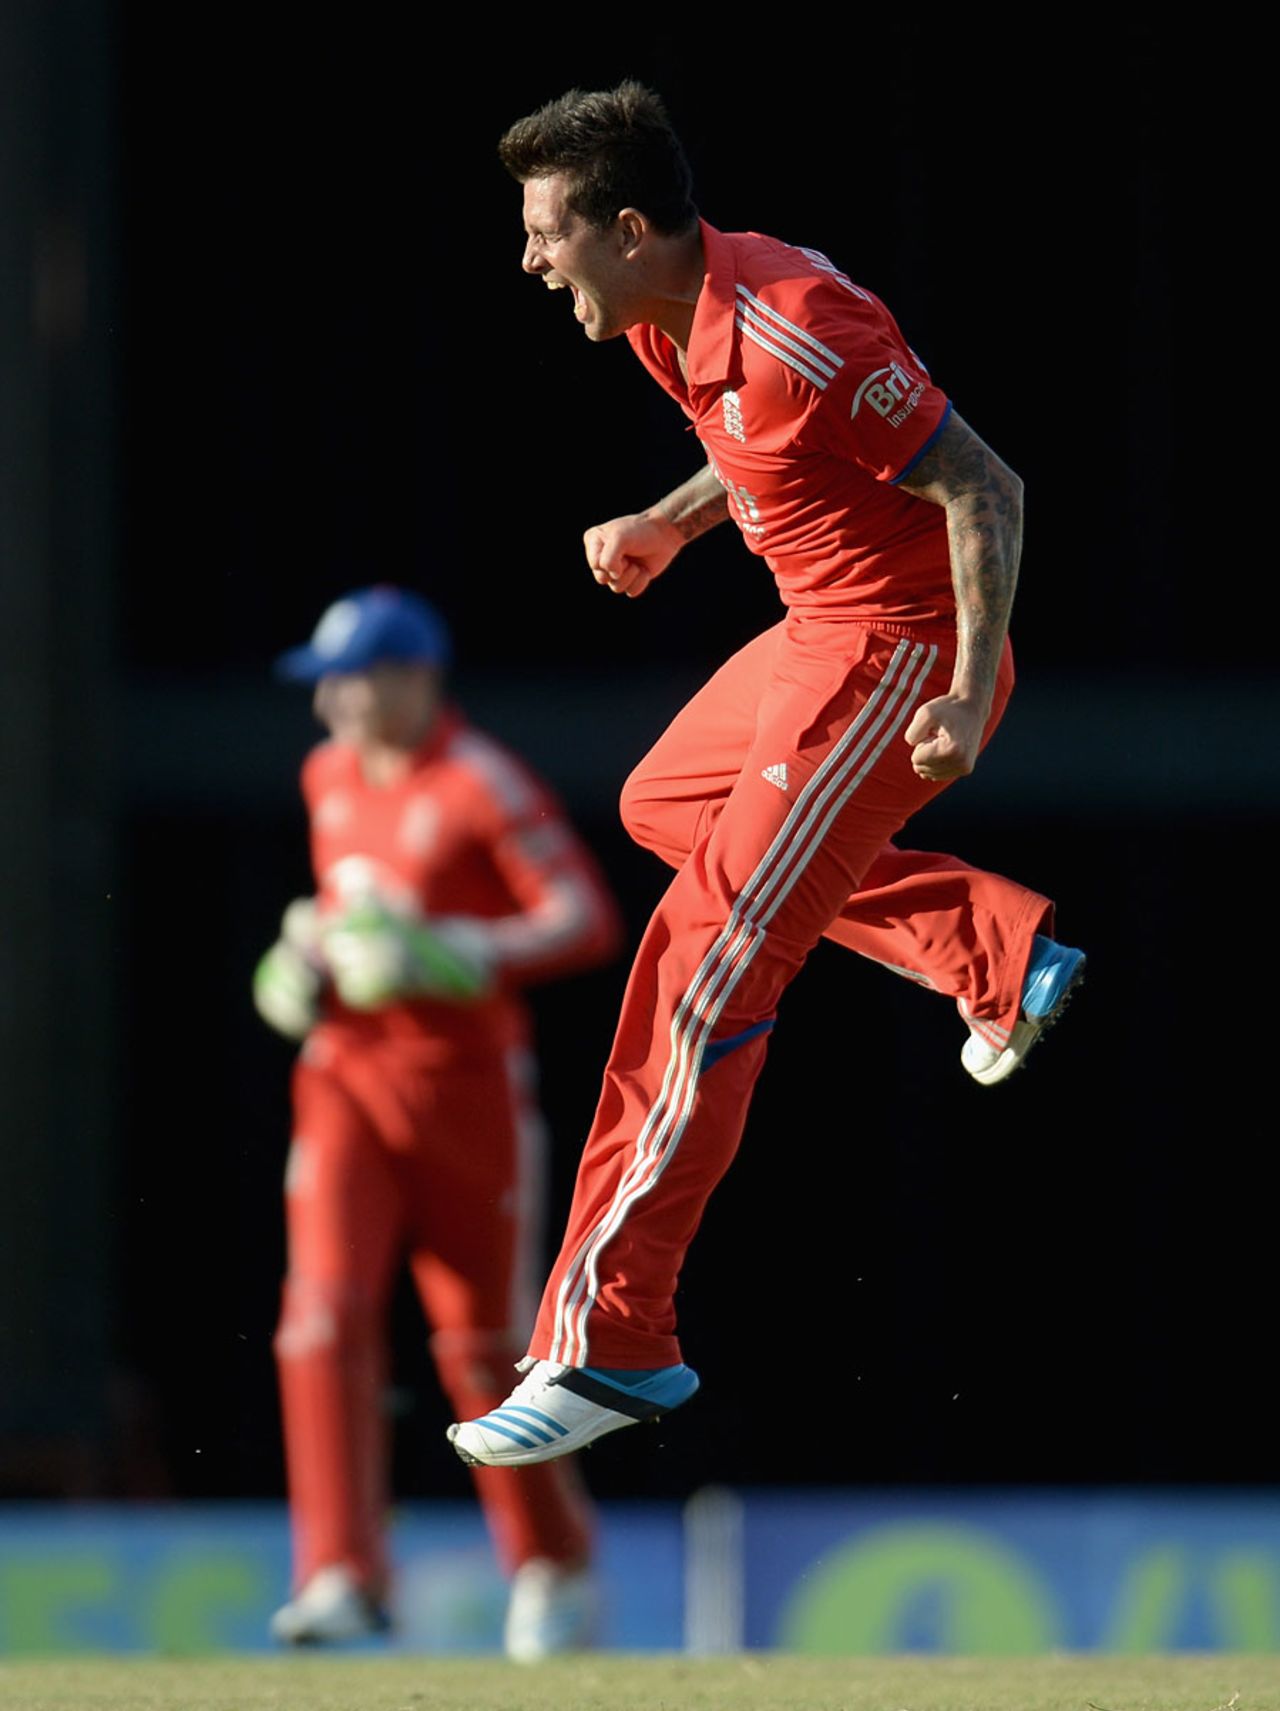 Jade Dernbach kept his nerve at the death, West Indies v England, 3rd T20, Barbados, March 13, 2014